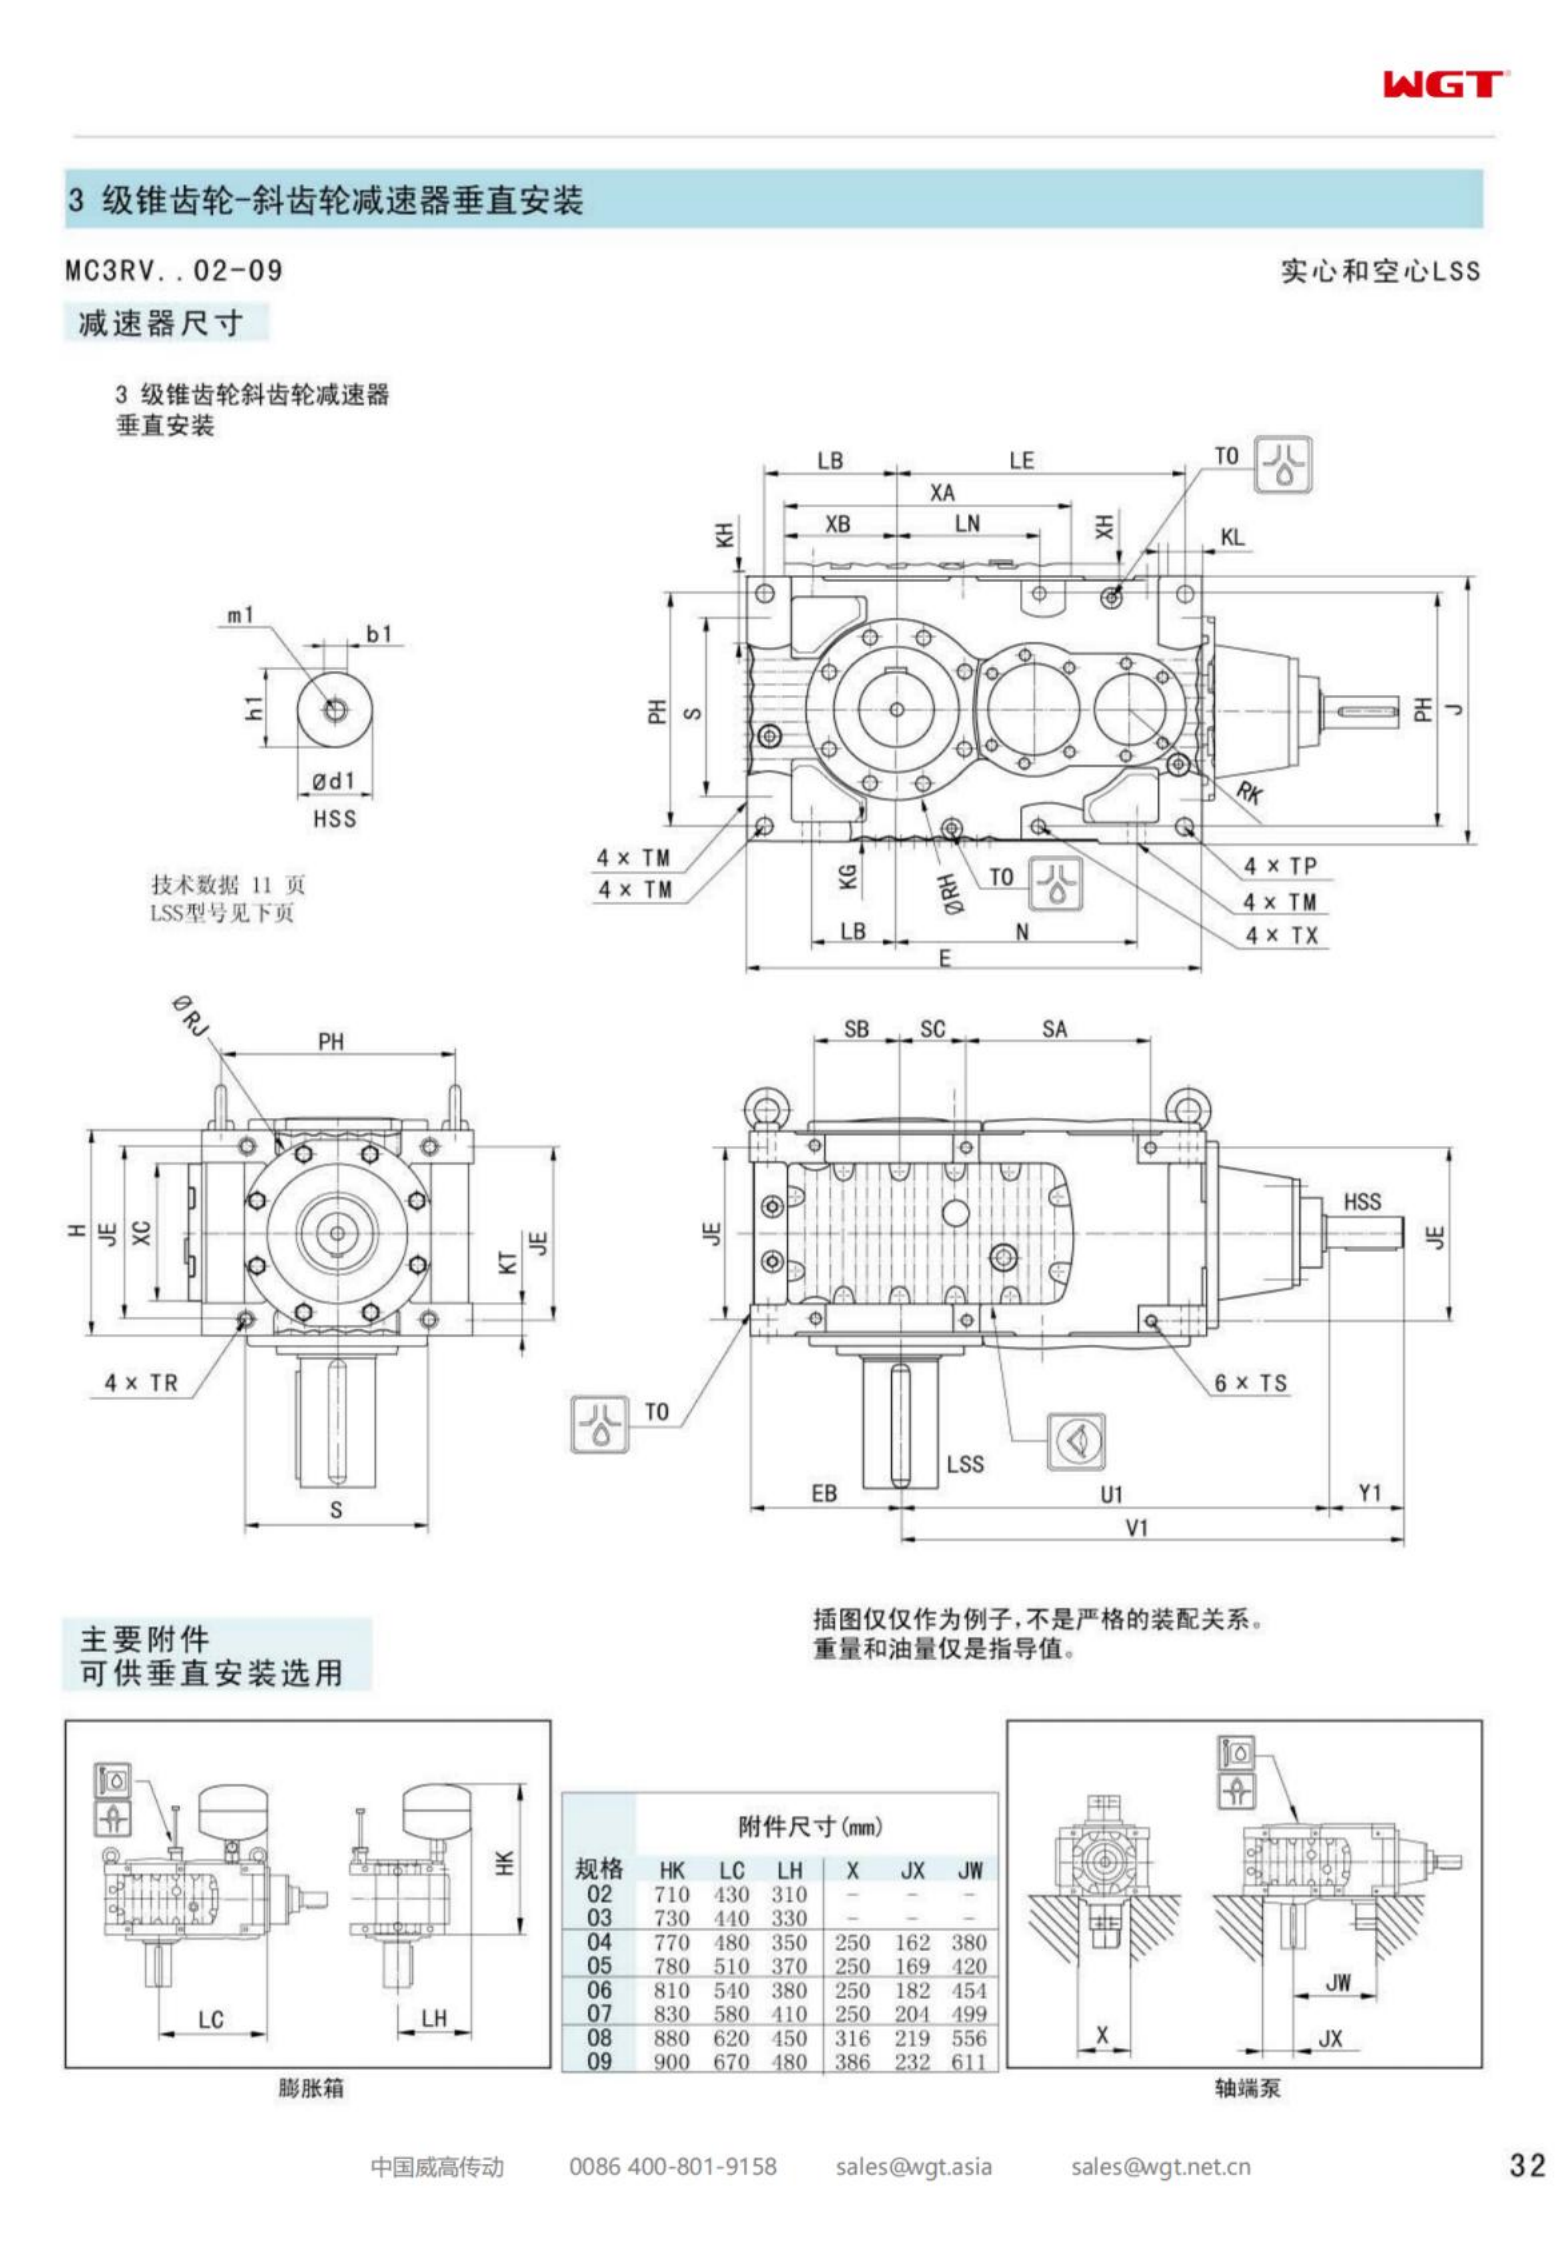 MC3RVHF03 replaces _SEW_MC_Series gearbox (patent)